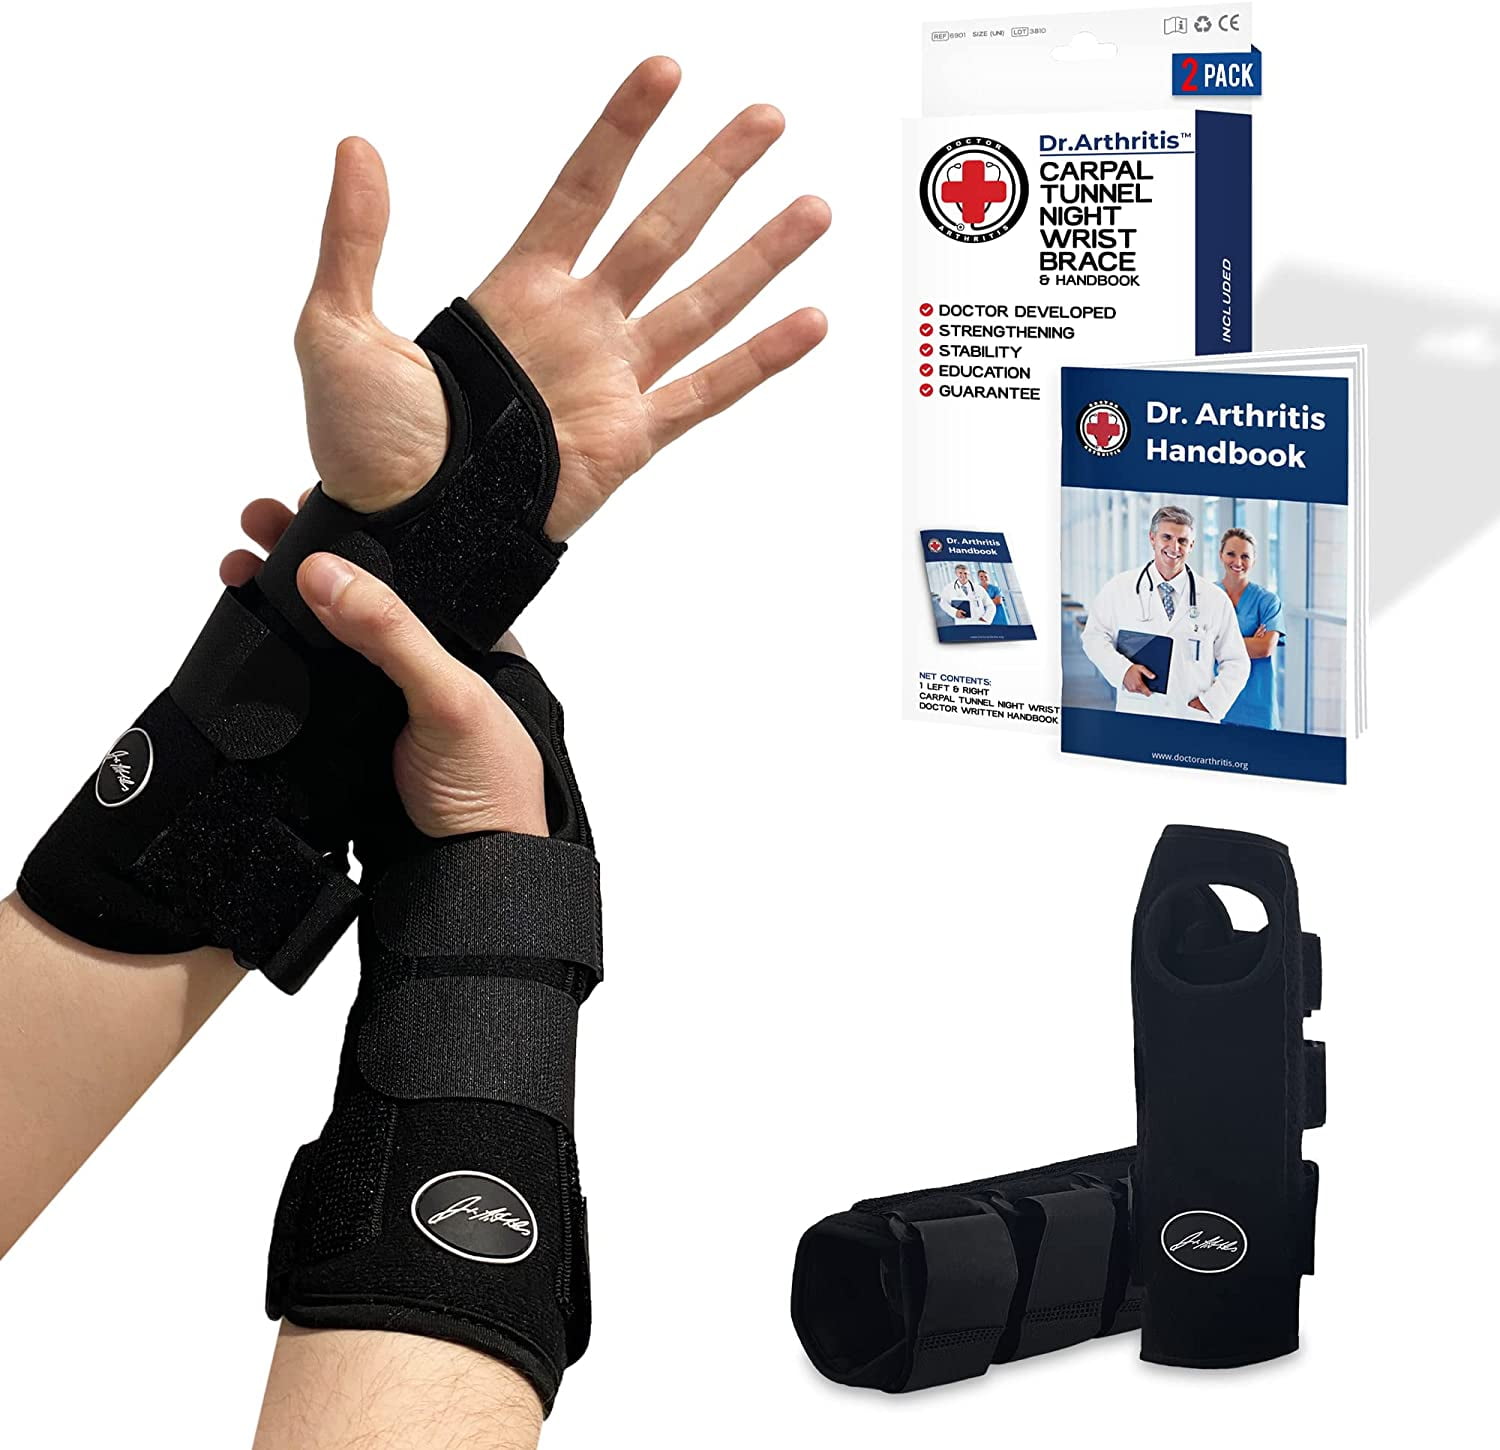 Orthopedic mouse pad during Arthritis Wrist Support – Everlasting